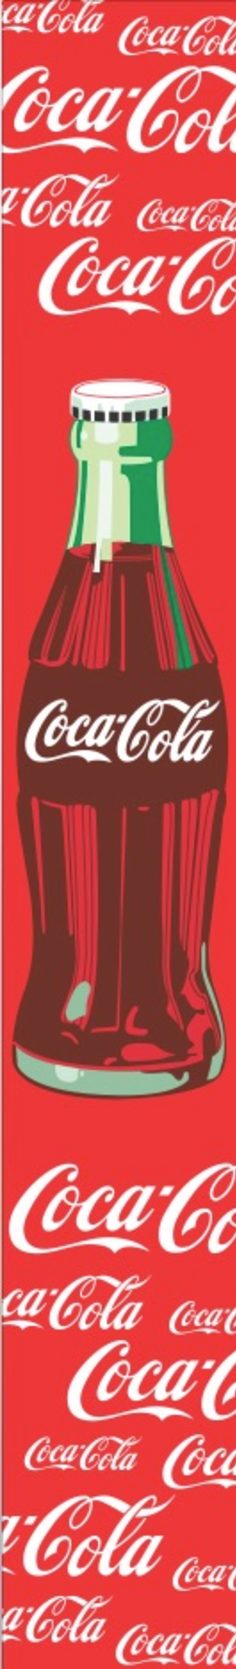 https://xpressprintinganddesign.com/wp-content/uploads/2017/06/Coke-Classic-Coke-Vertical-pdf.jpg